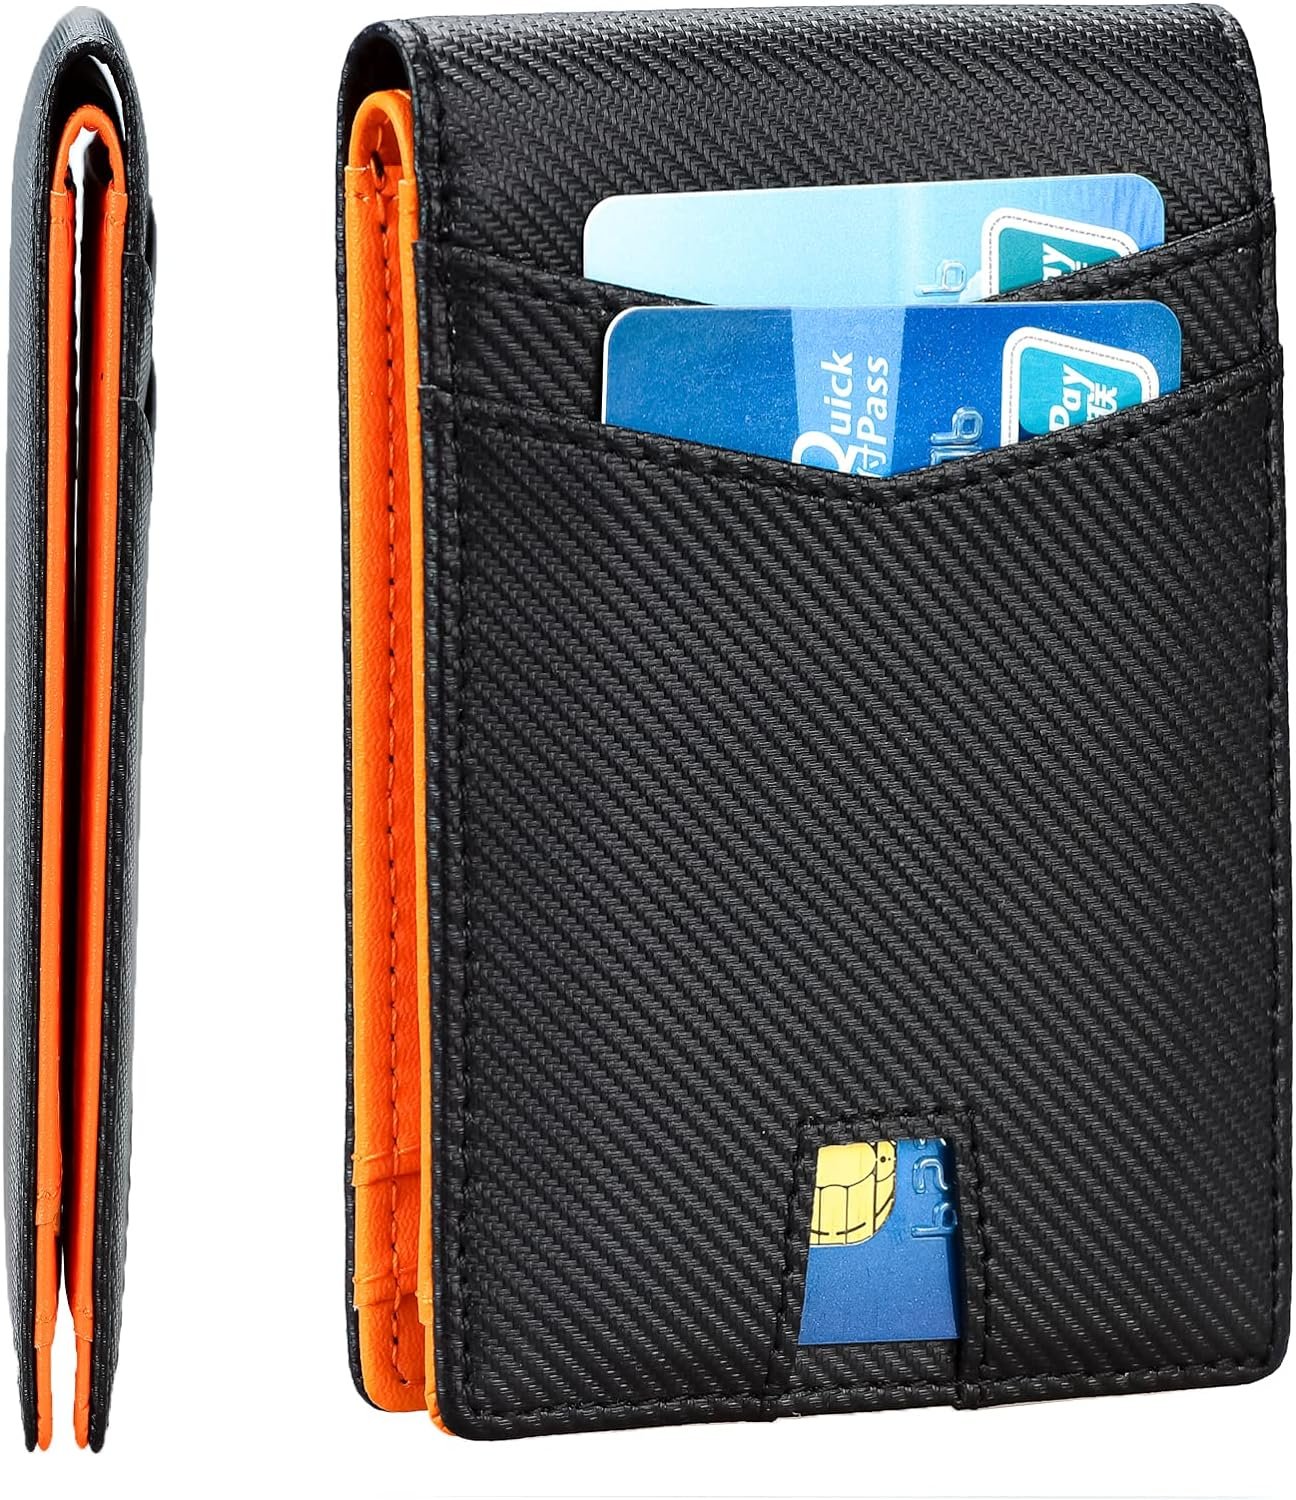 Black Slim Men’s Wallet RFID Blocking Credit Card Paper Money ID Card BiFold Wallet Review